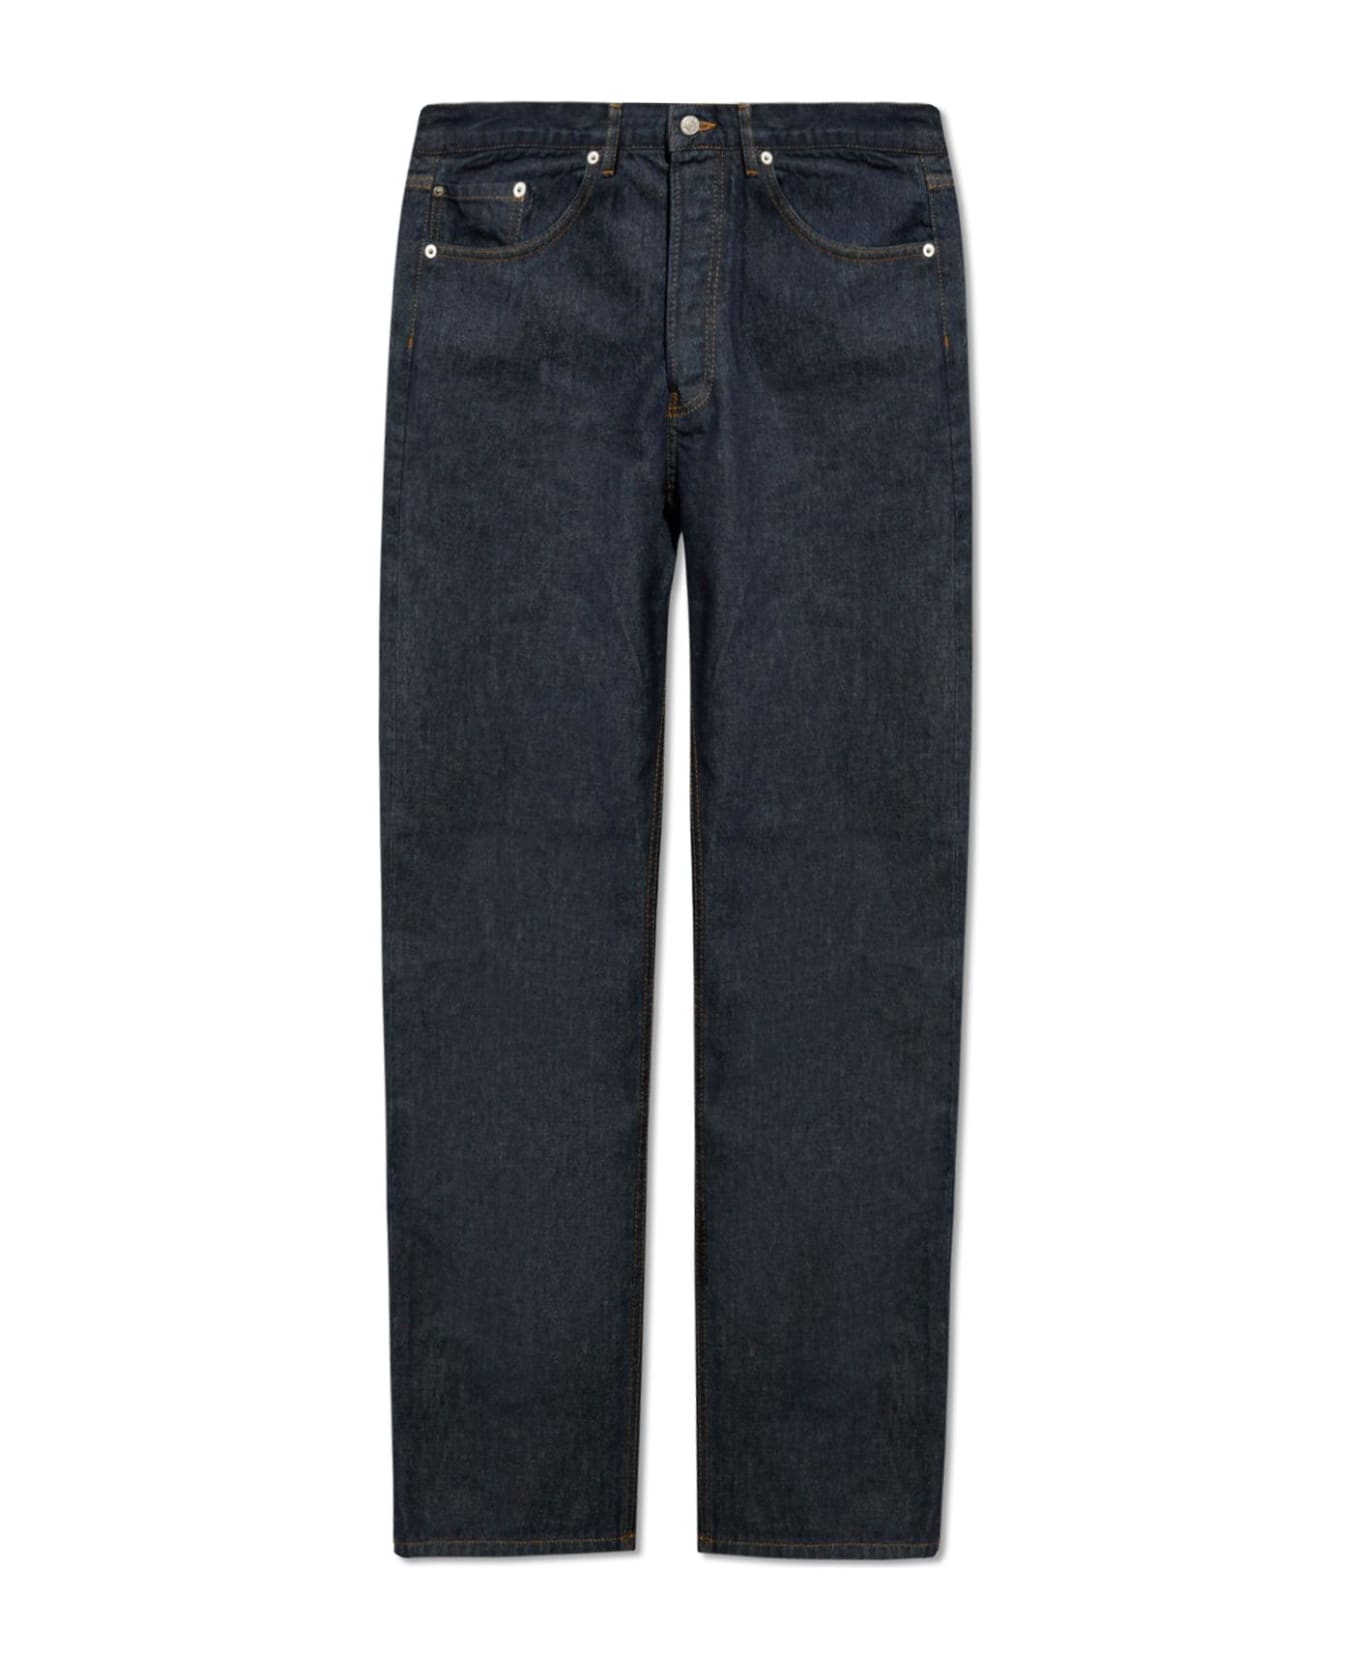 Dries Van Noten Jeans With Straight Legs - Indigo デニム